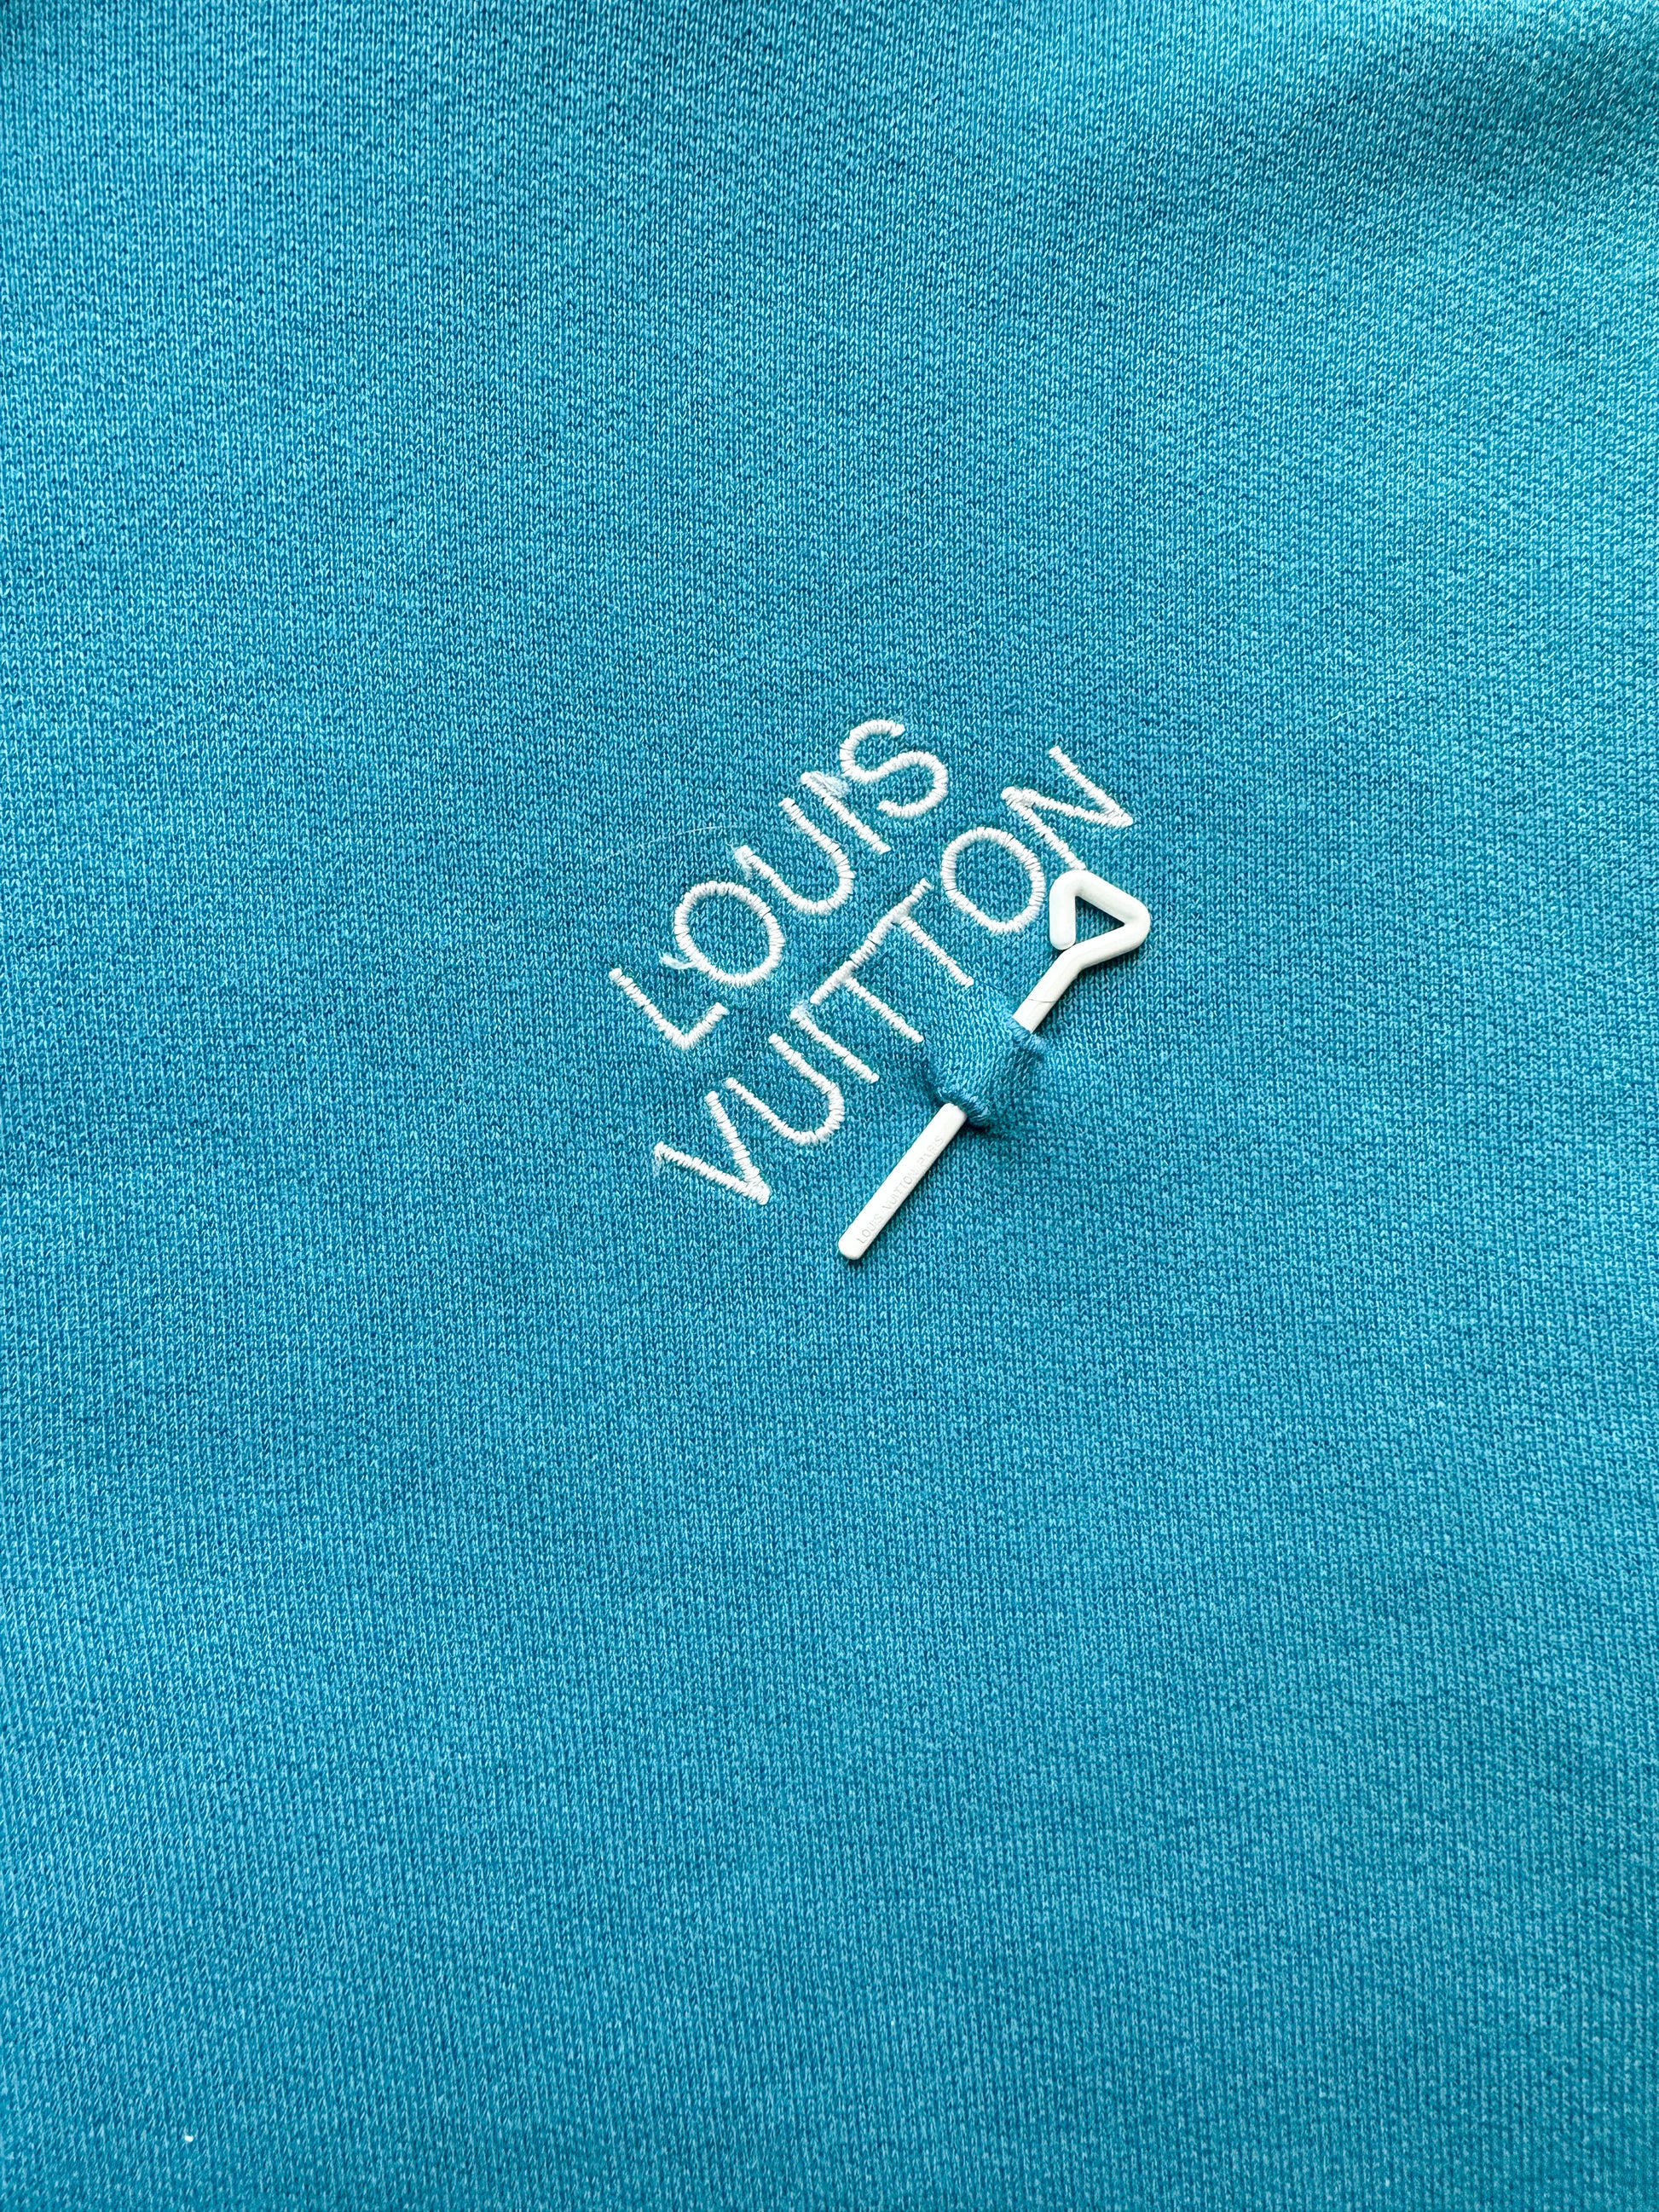 Louis Vuitton Monogram Circle Cut Hoodie Ocean